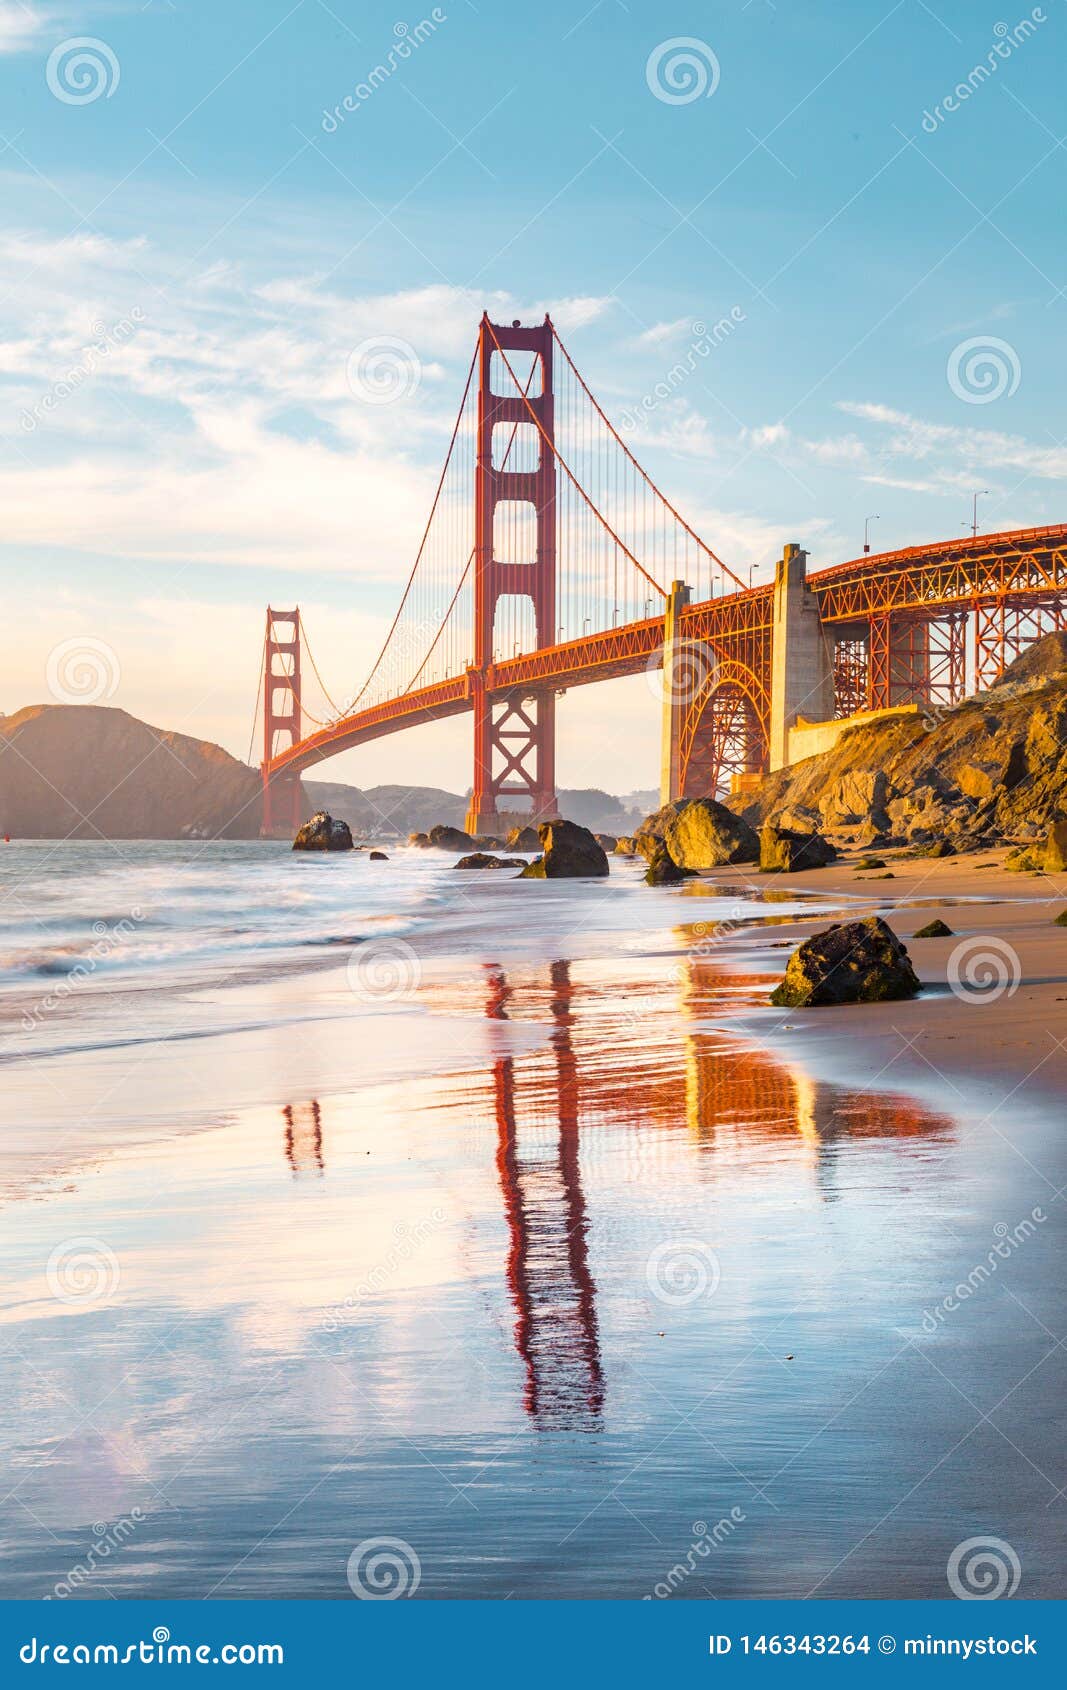 golden gate bridge at sunset, san francisco, california, usa